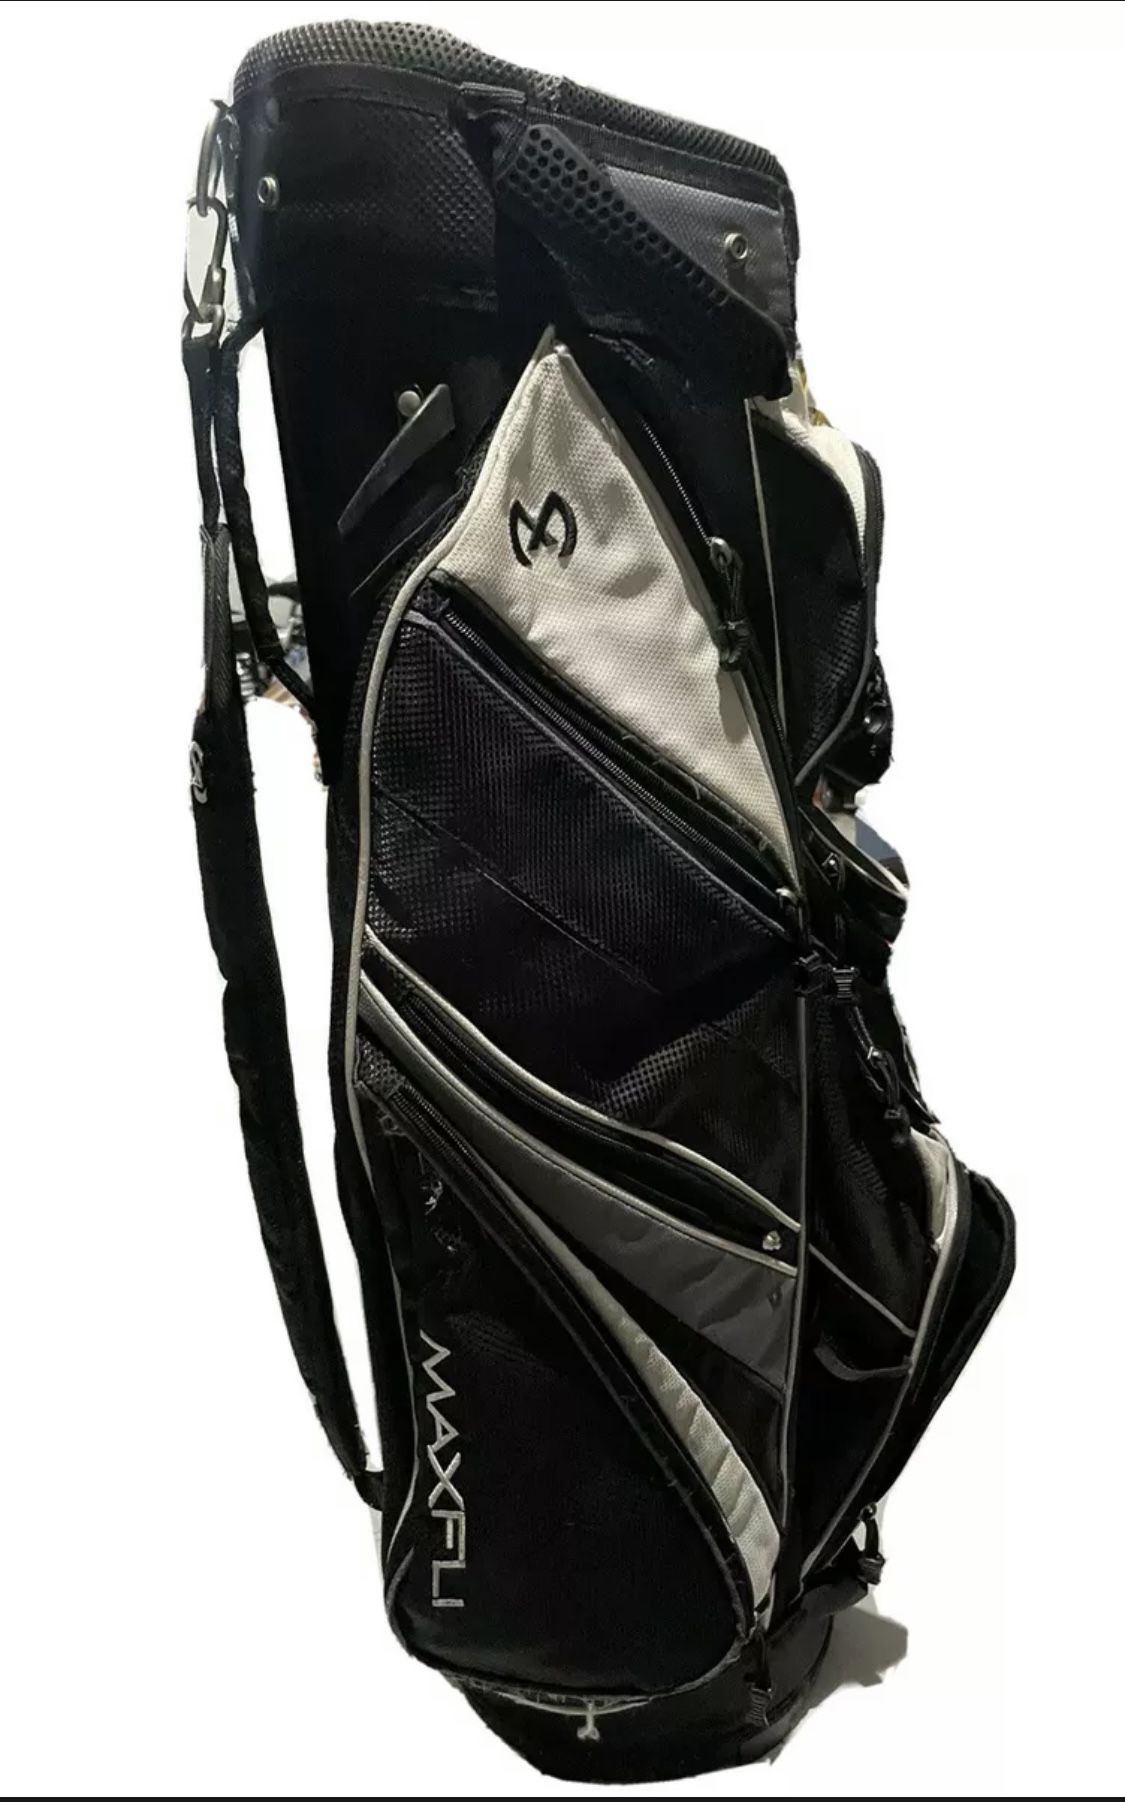 Maxfli Golf Cart Bag White Black Gray 13 Way Dividers 12 Pockets